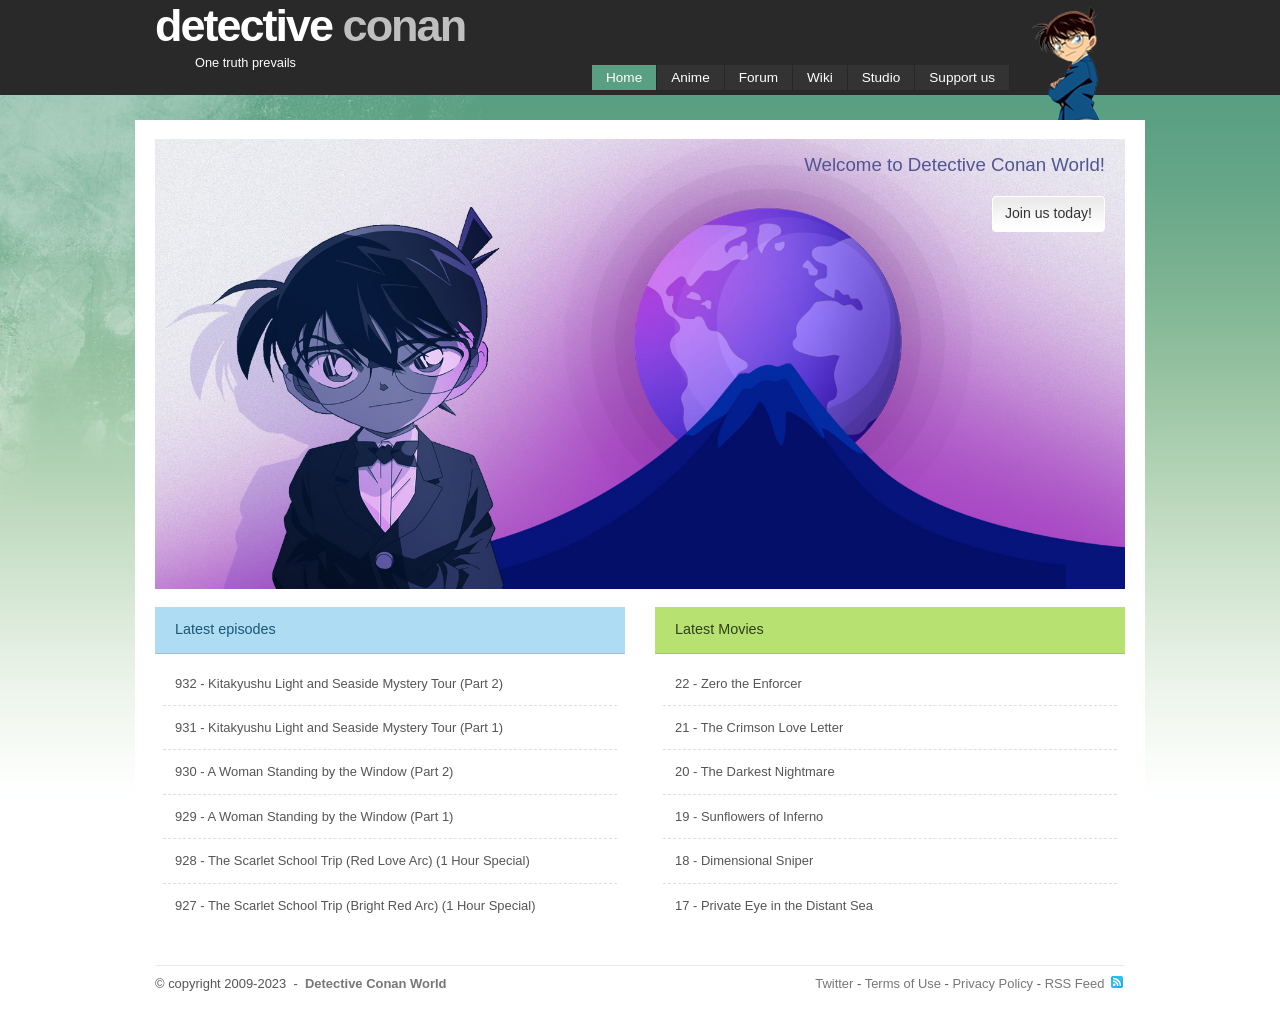 www.detectiveconanworld.com